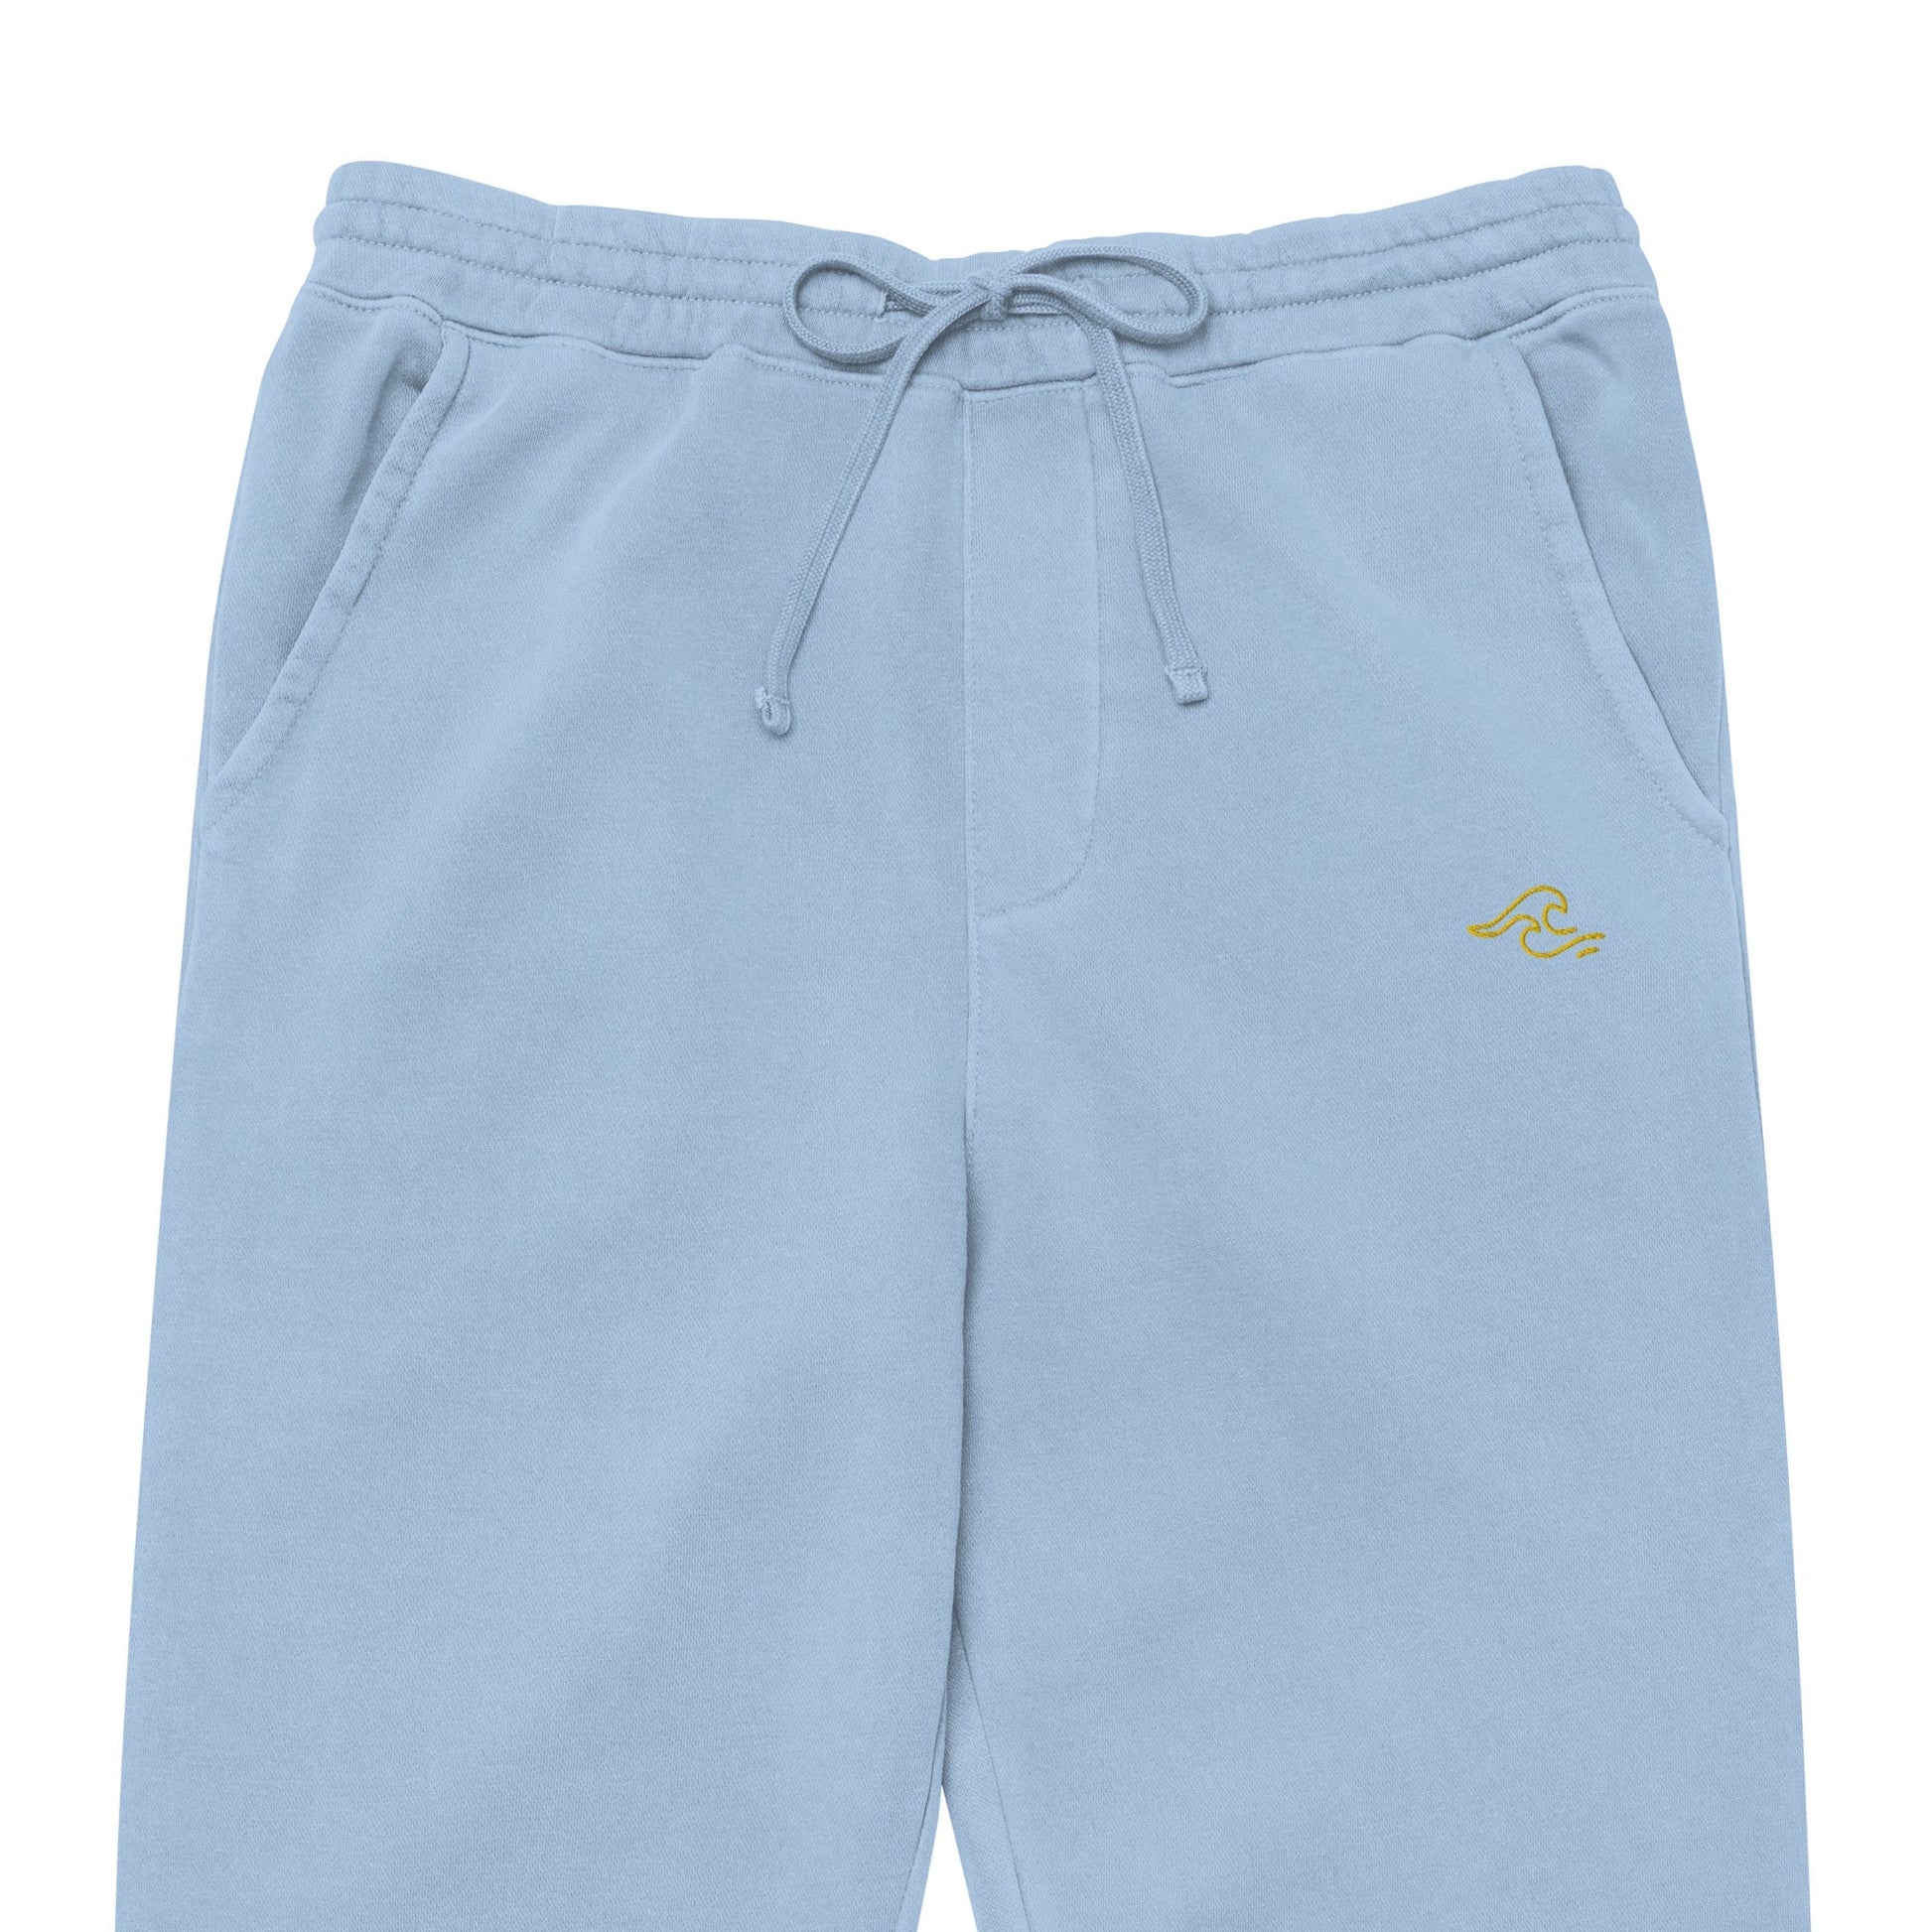 Comfort Swell sweatpants - Tropical Seas Clothing 